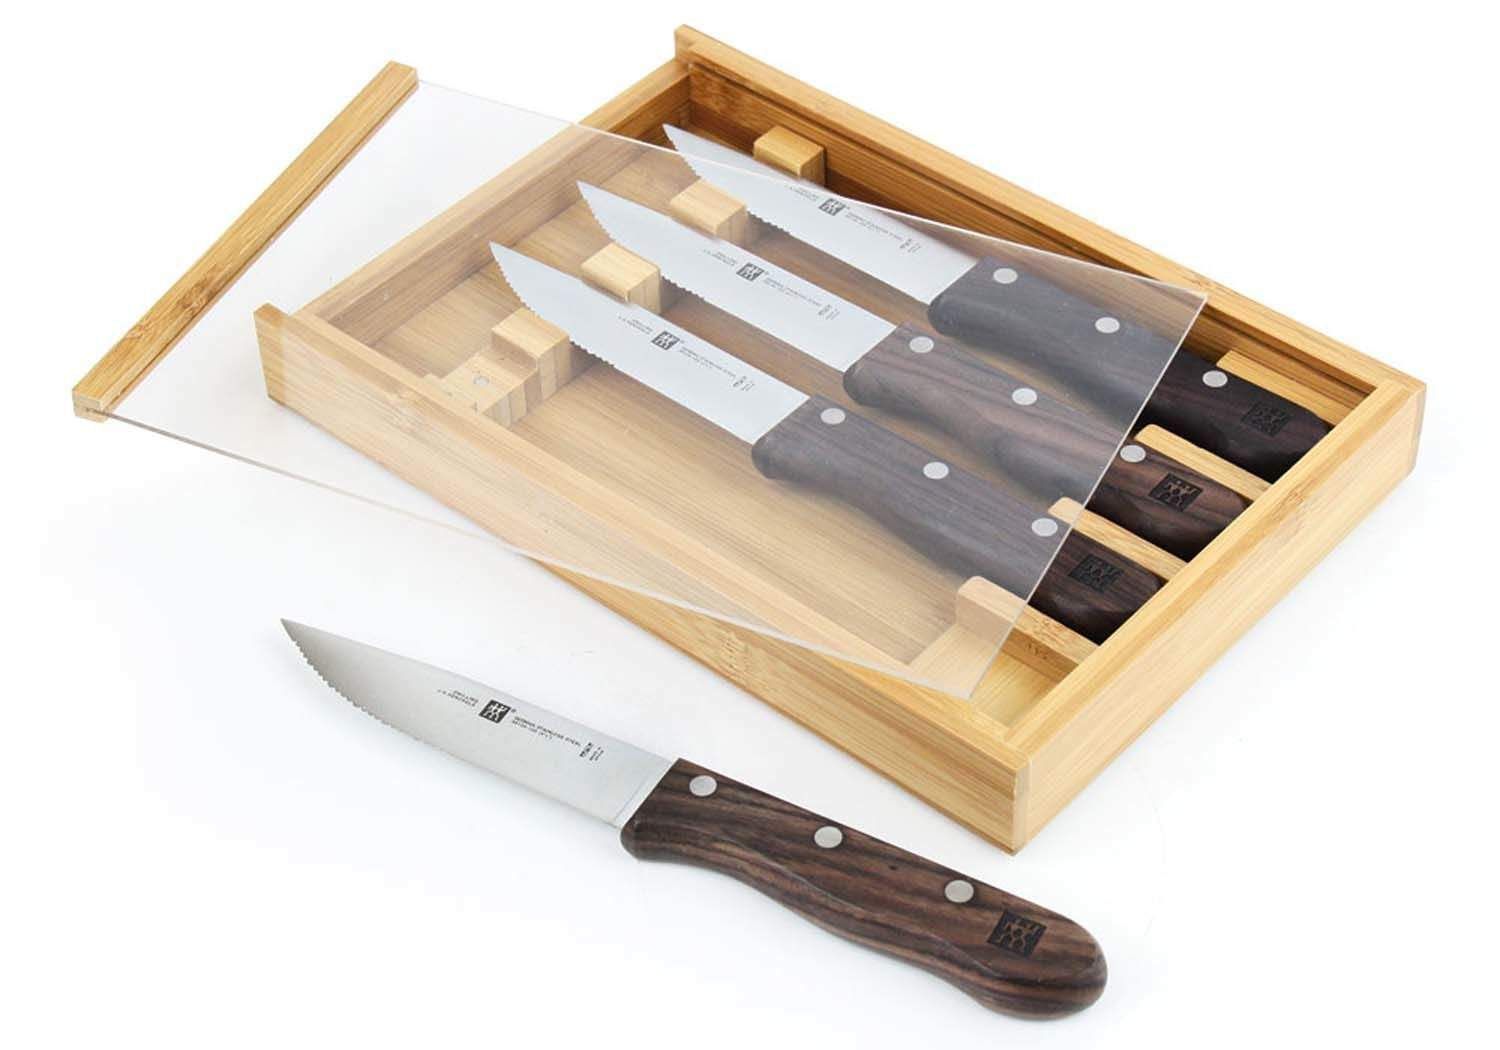 Zwilling J.A. Henckels Steakhouse 4-Piece Steak Knife Set with Storage Case